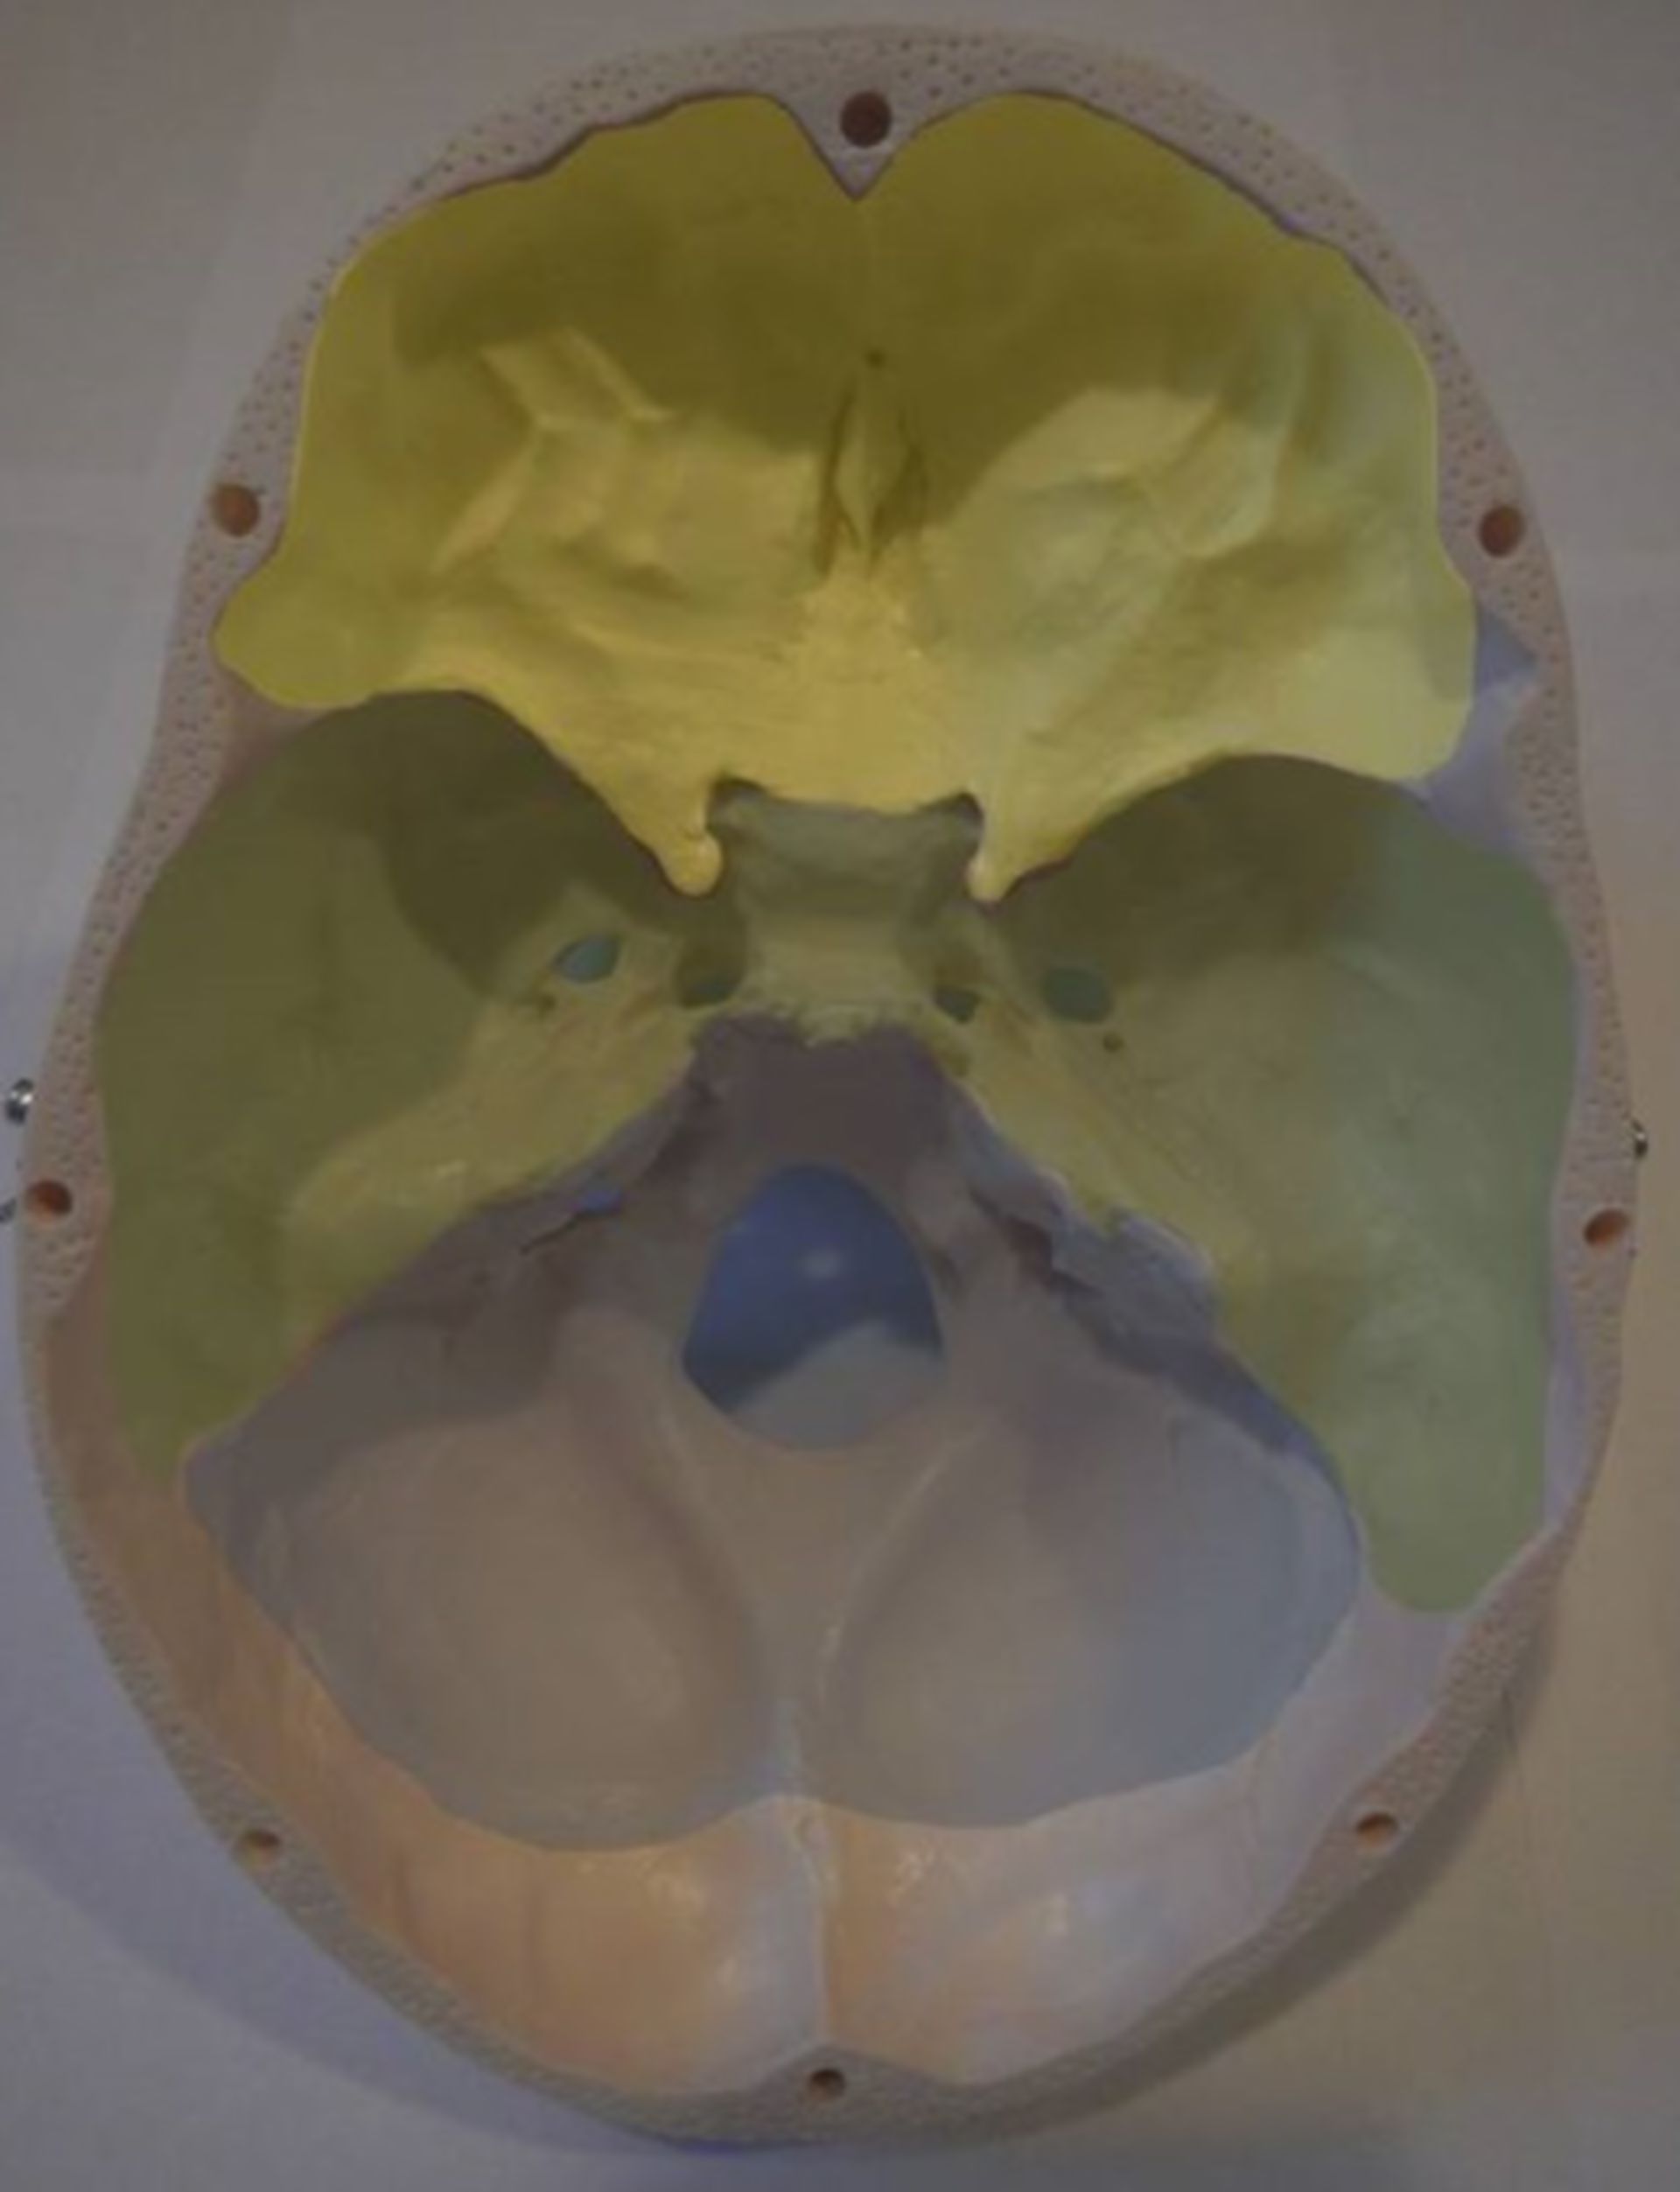 Basis cranii interna - Base of the skull from inside